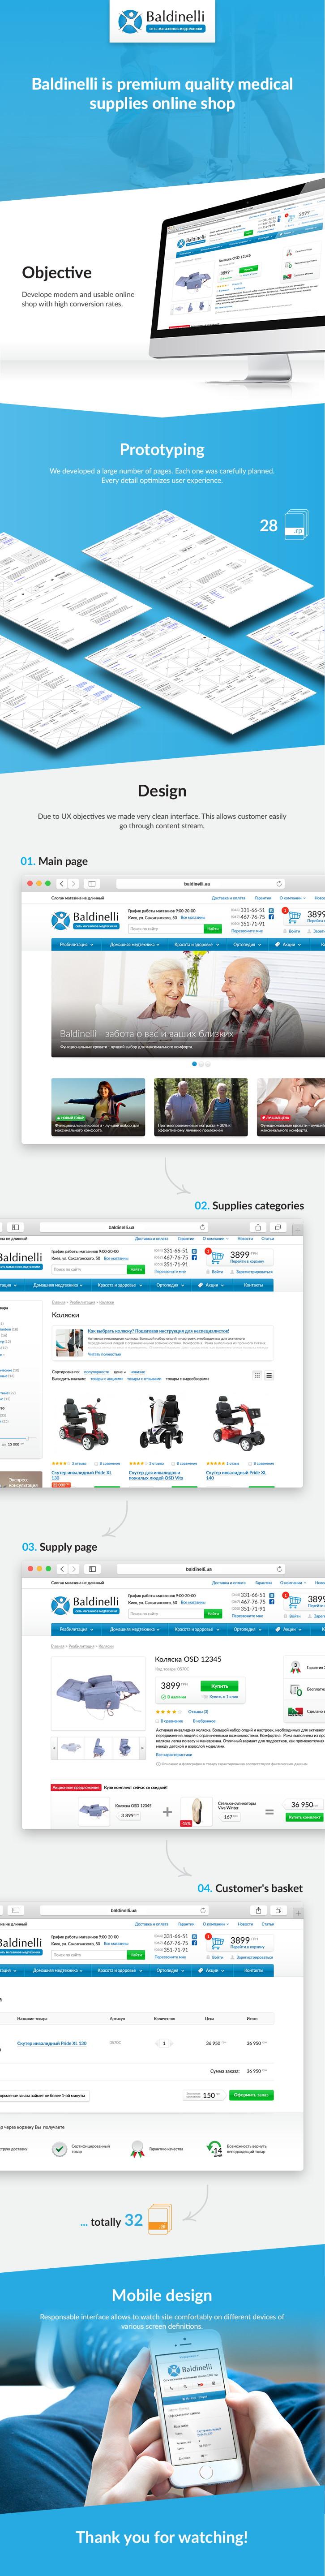 Internet shop of medical equipment Baldinelli